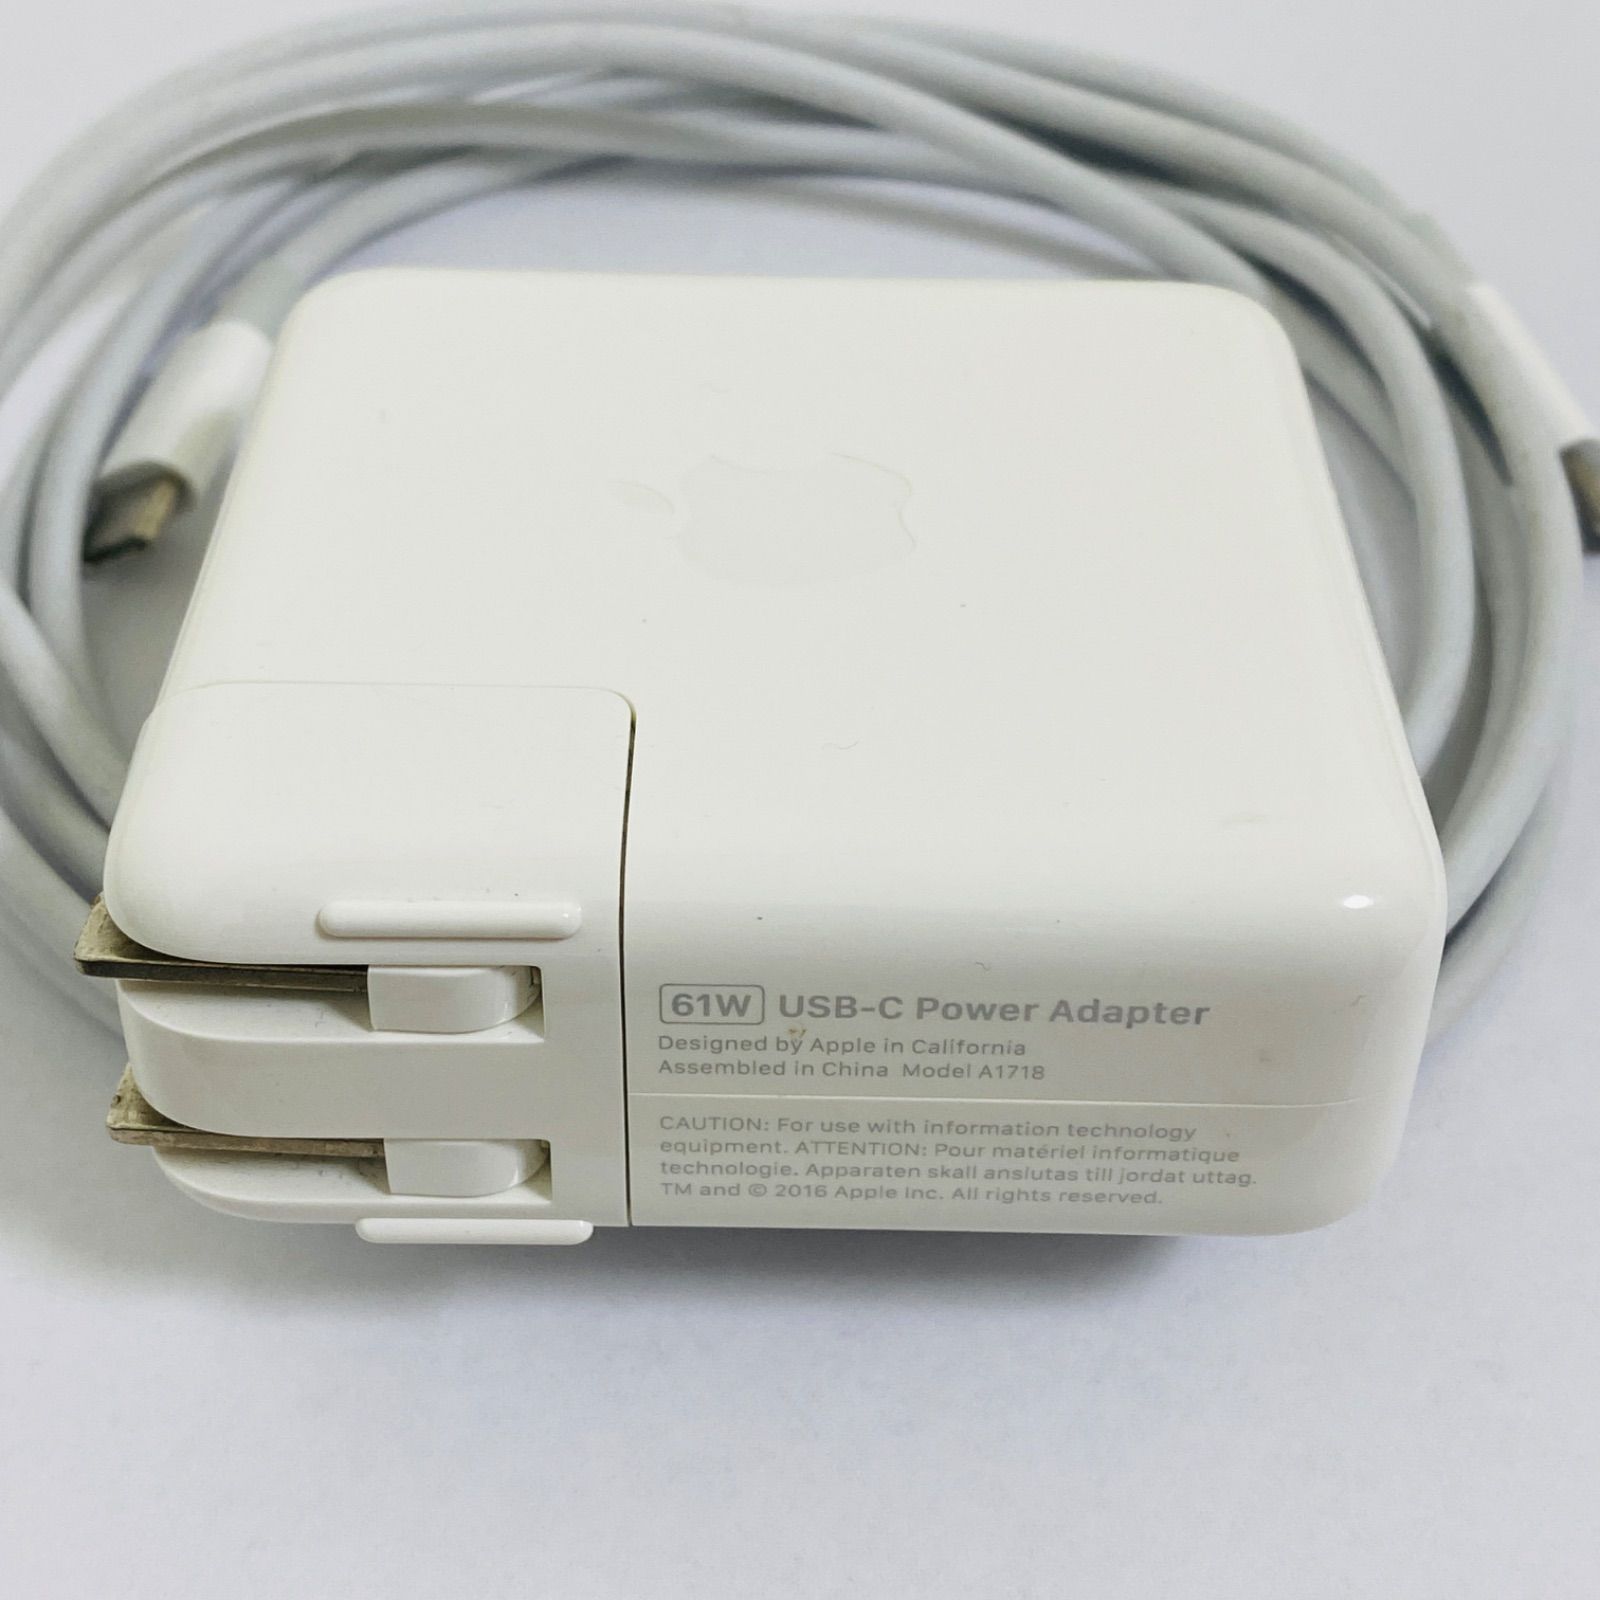 APPLE 61W USB-C 電源アダプタとケーブル